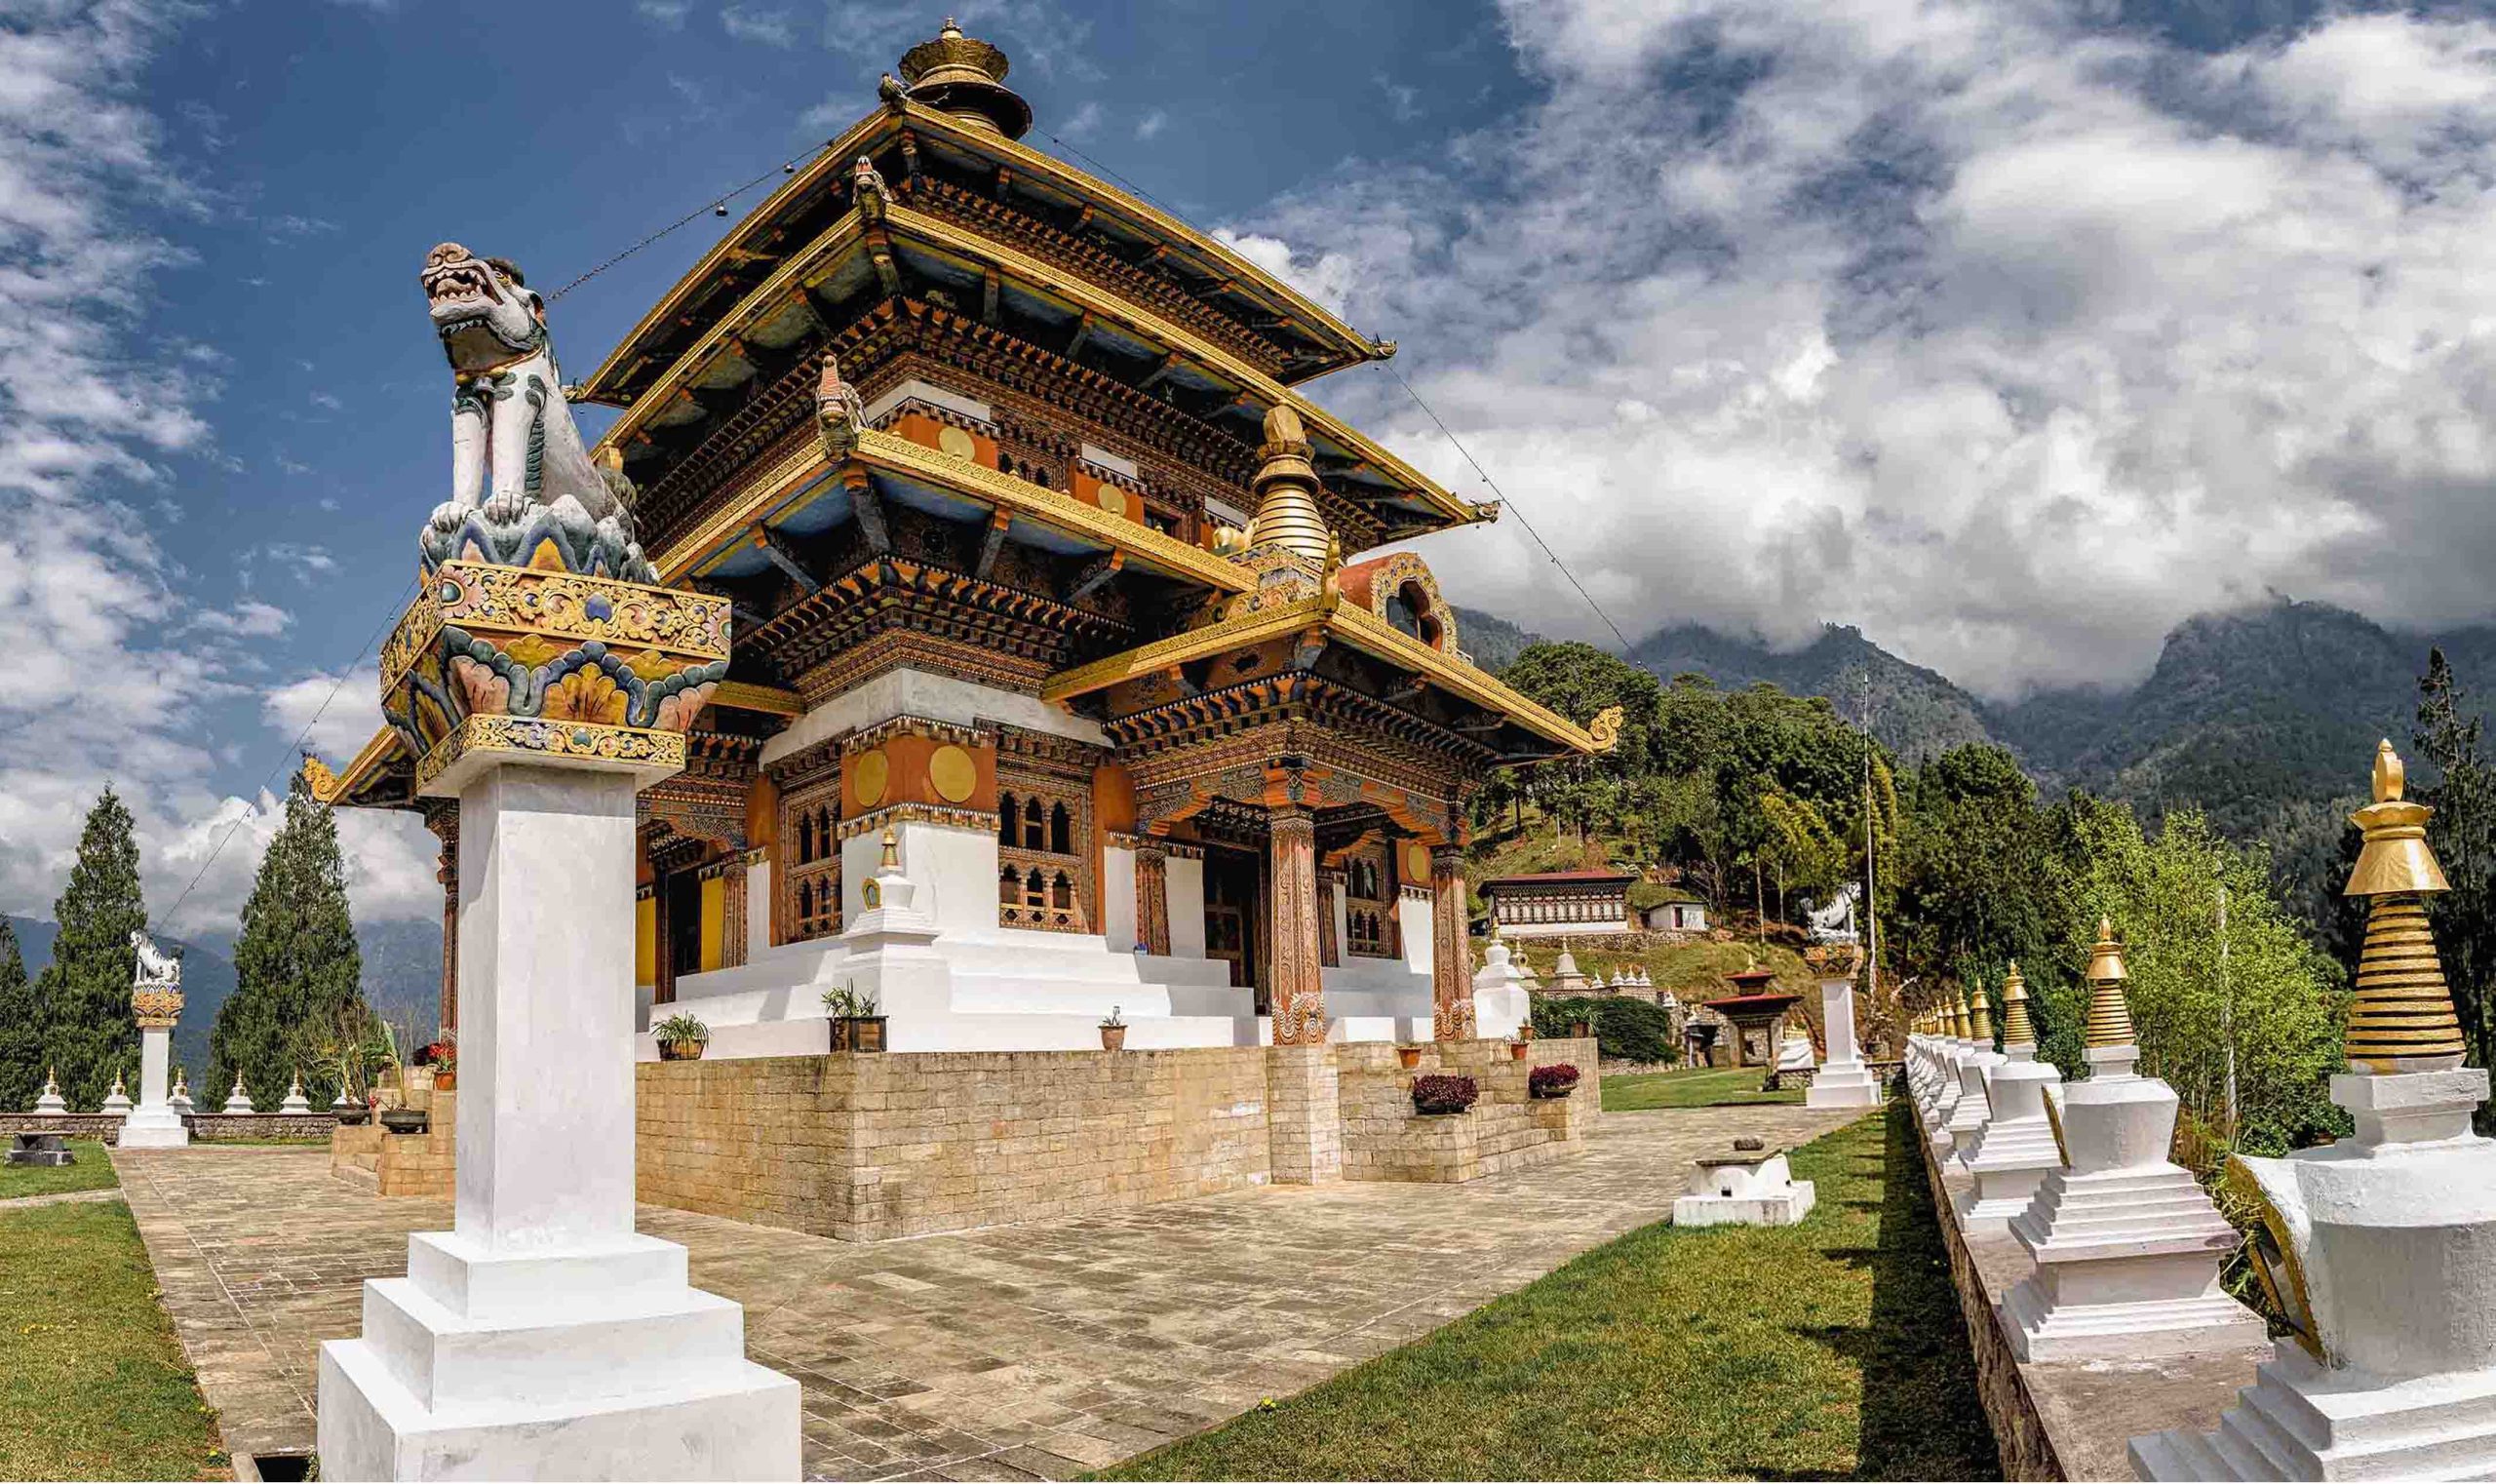 architecture-of-khamsum-yulley-namgyal-chorten